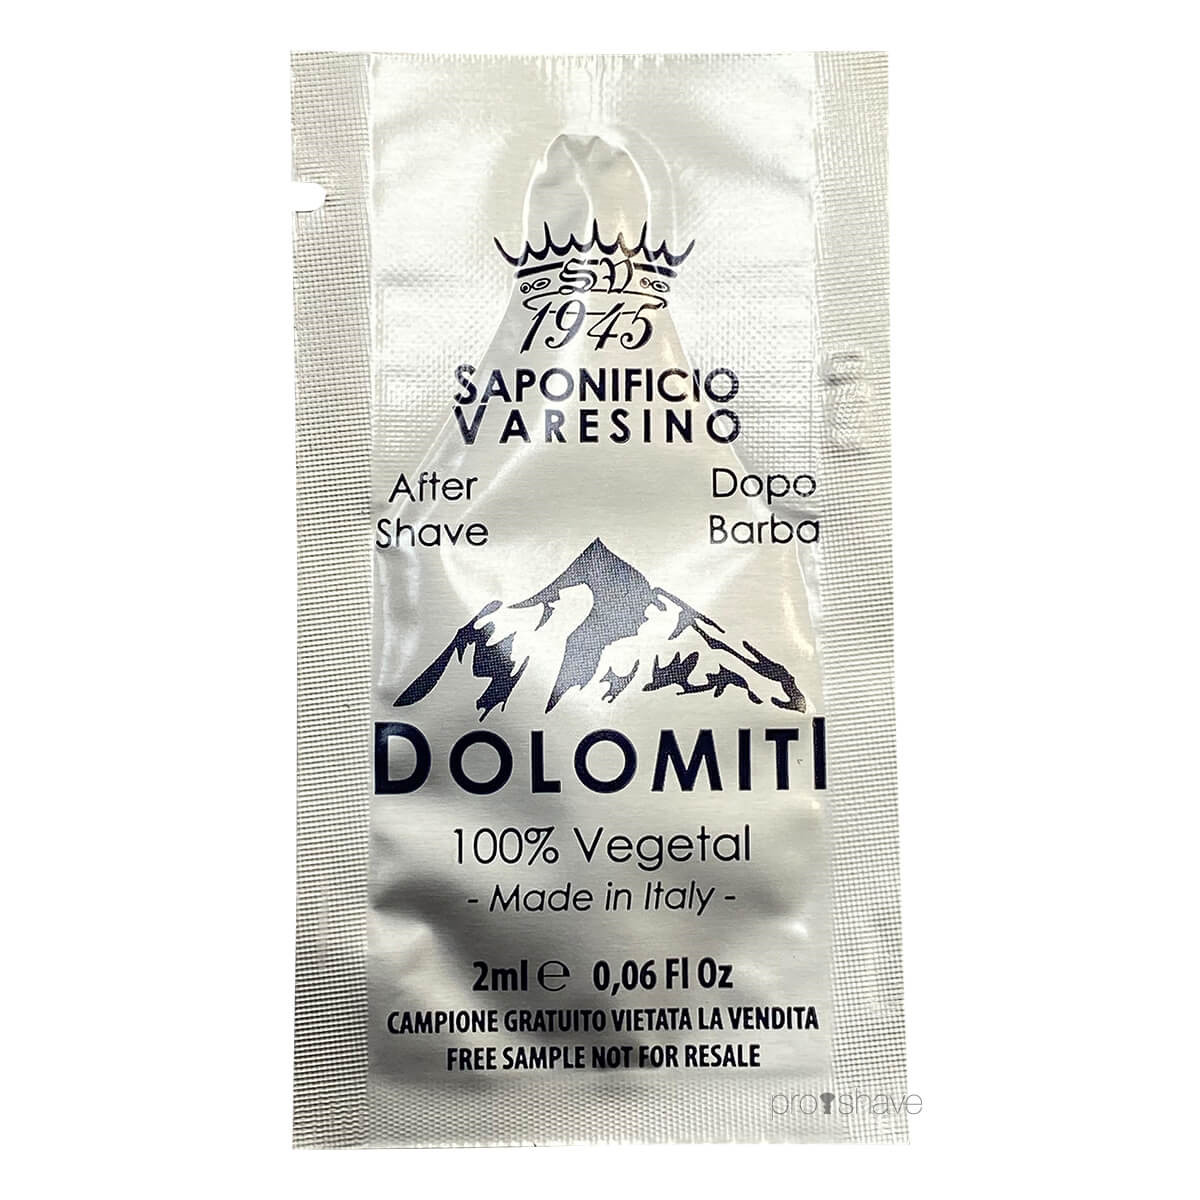 Se Saponificio Varesino Aftershave, Dolomiti, SAMPLE, 2 ml. hos Proshave